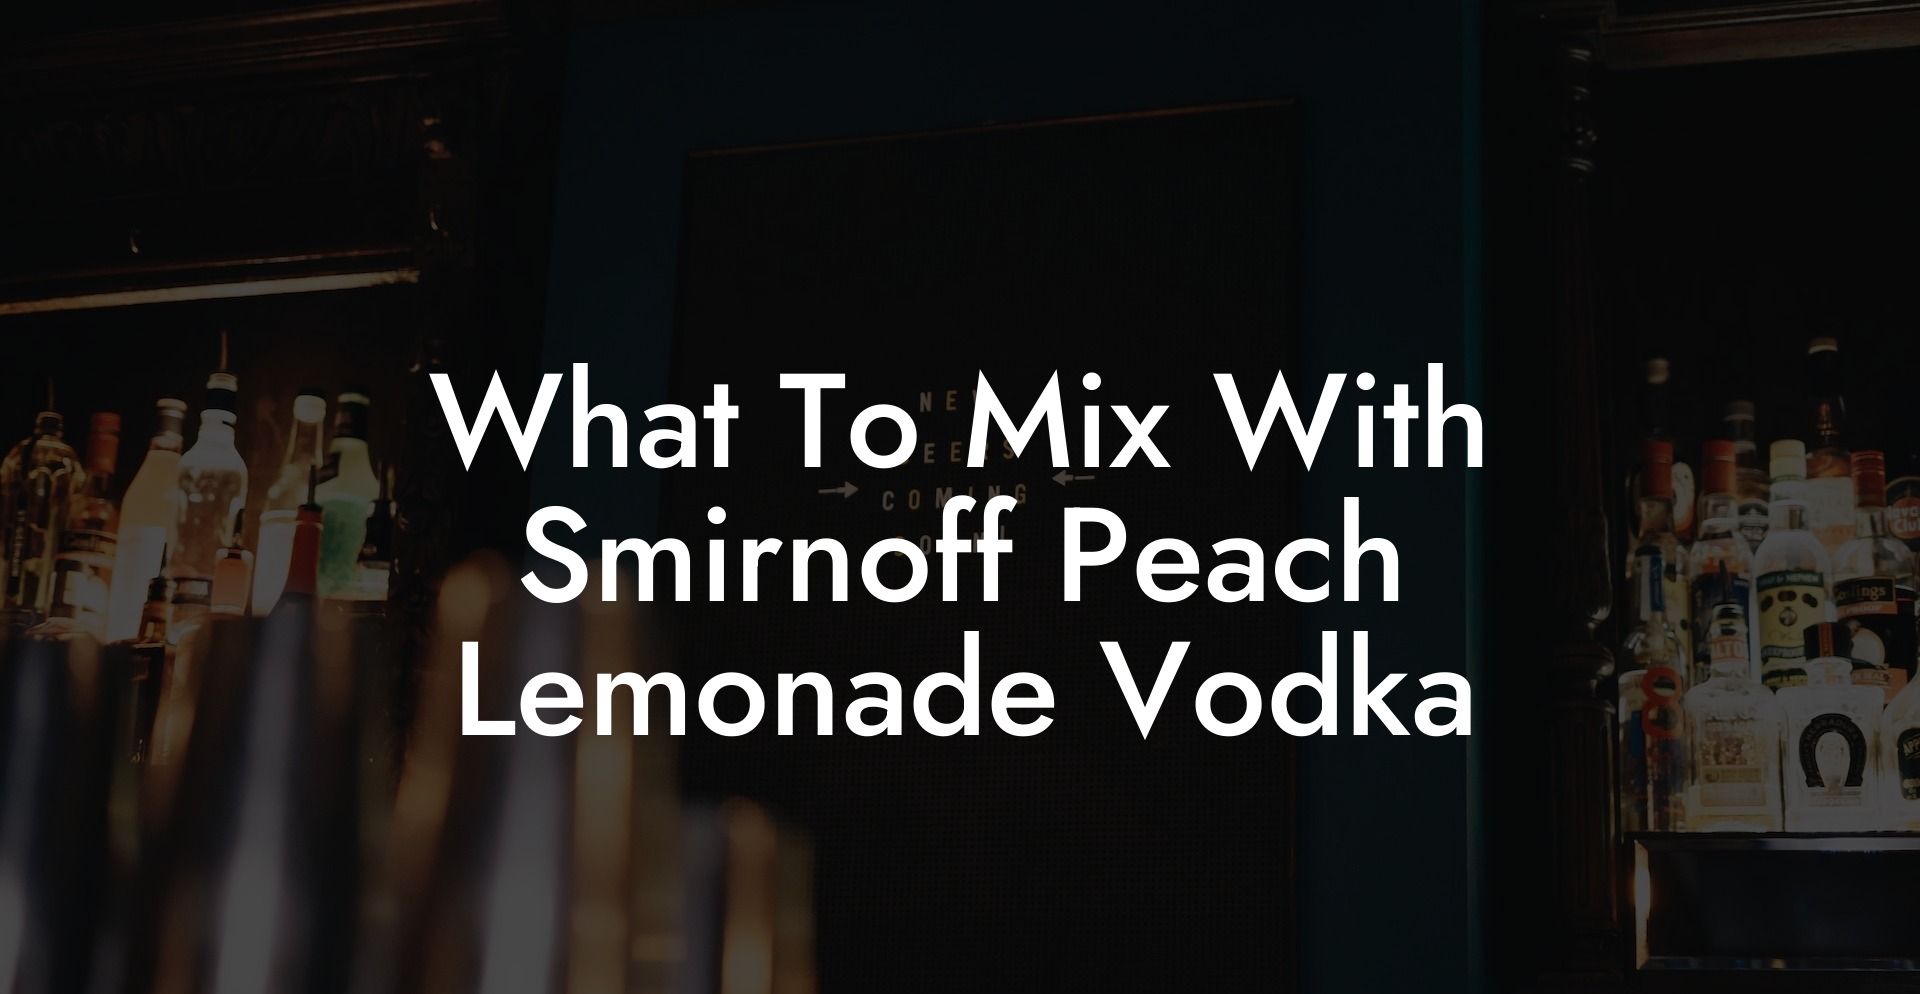 What To Mix With Smirnoff Peach Lemonade Vodka